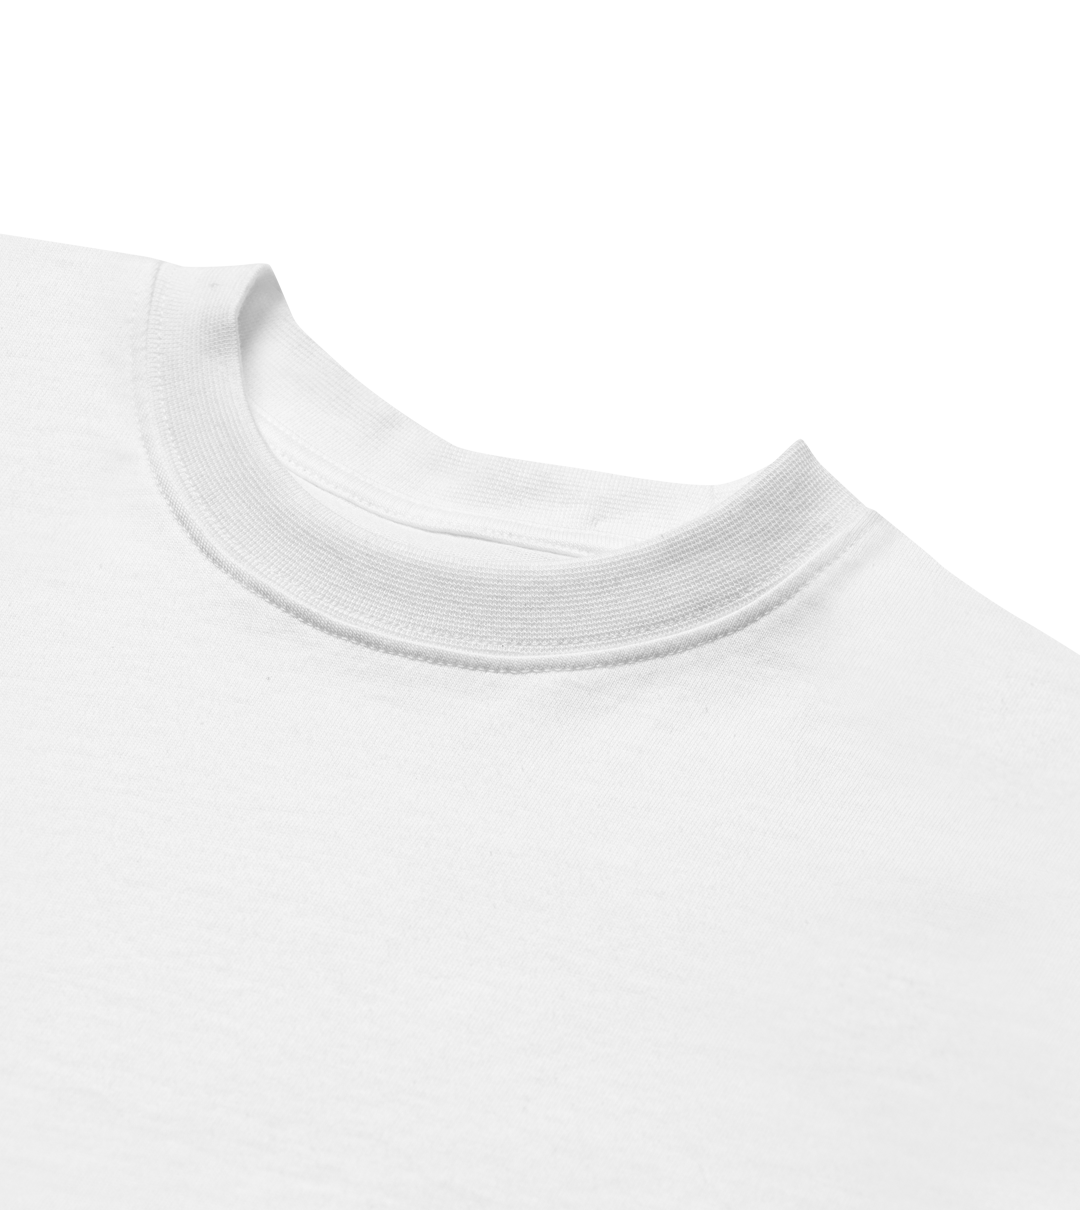 BUTTERFLY RAMMOR OFF-BLACK MONOCHROME - Oversize Unisex Organic Cotton T-Shirt